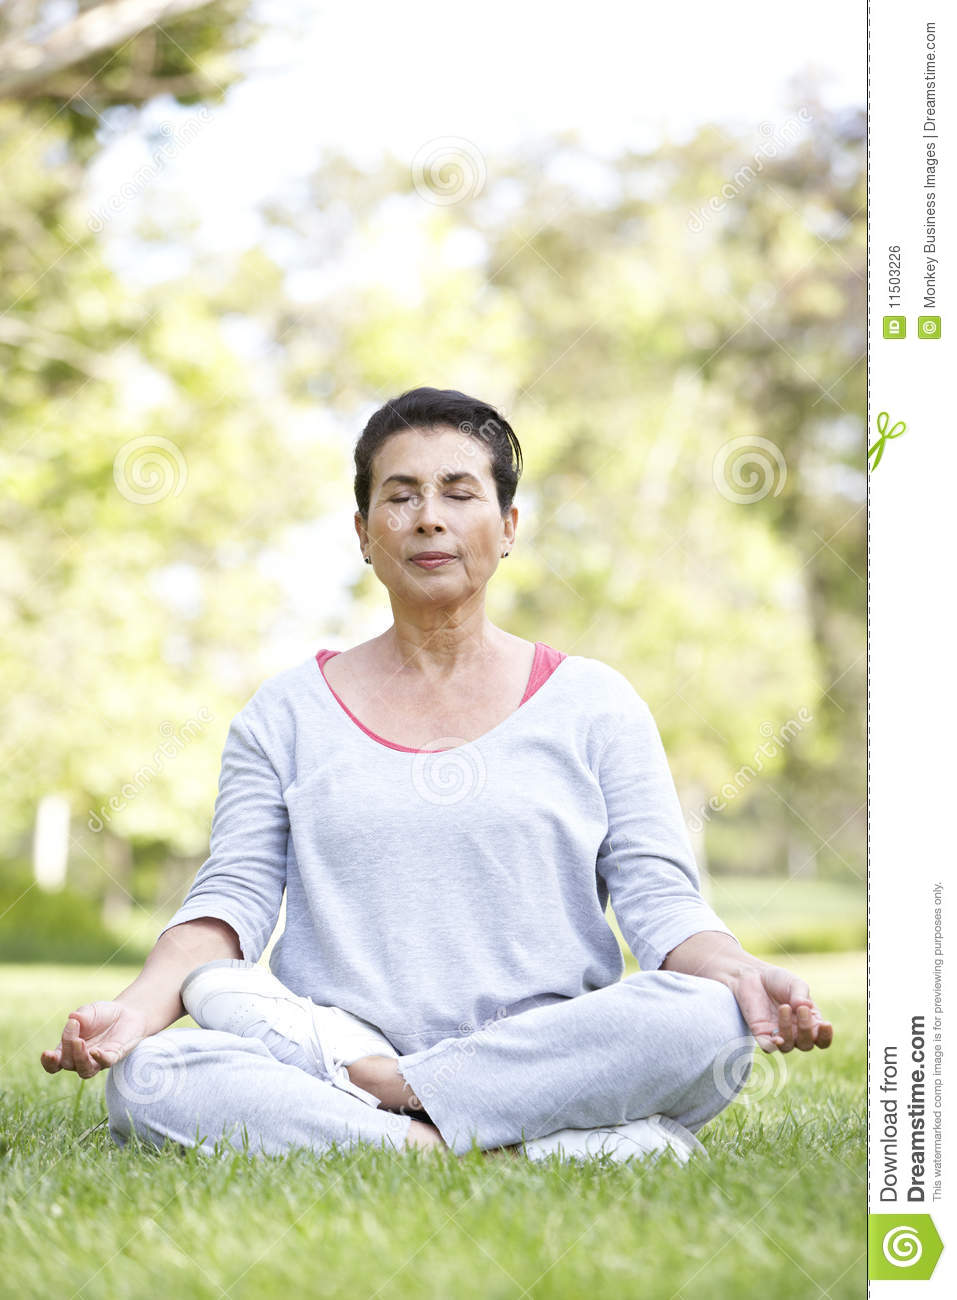 Senior Woman Doing Yoga In Park Royalty Free Stock Image   Image